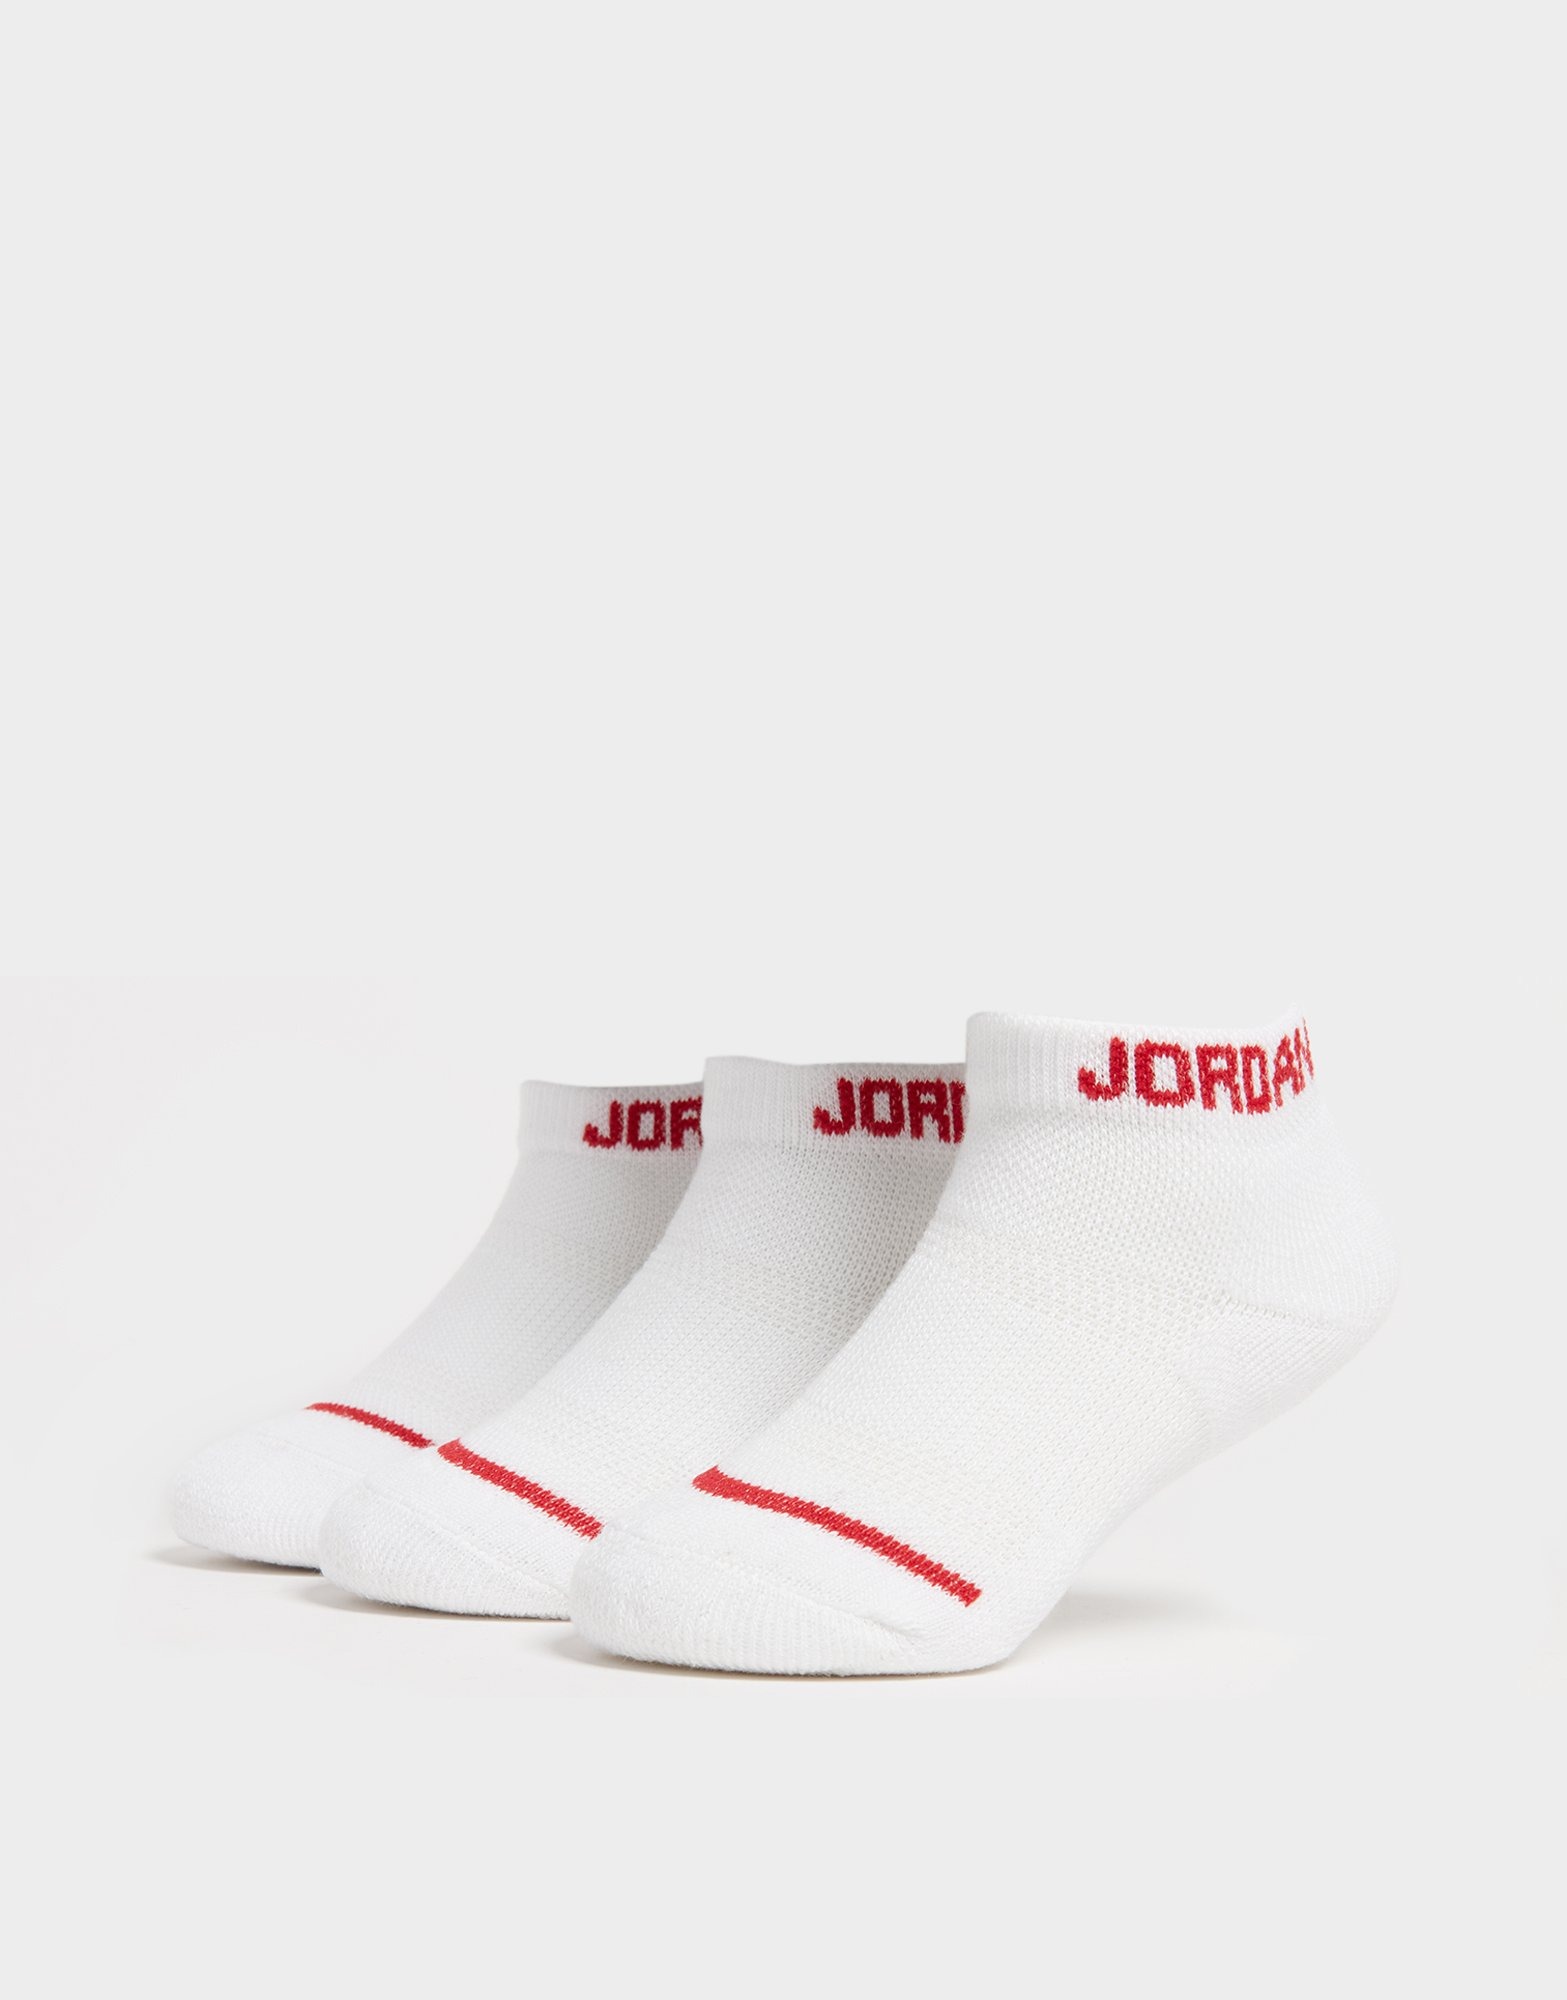 Nike Jordan - Jumpman - Chaussettes classiques à logo - Blanc